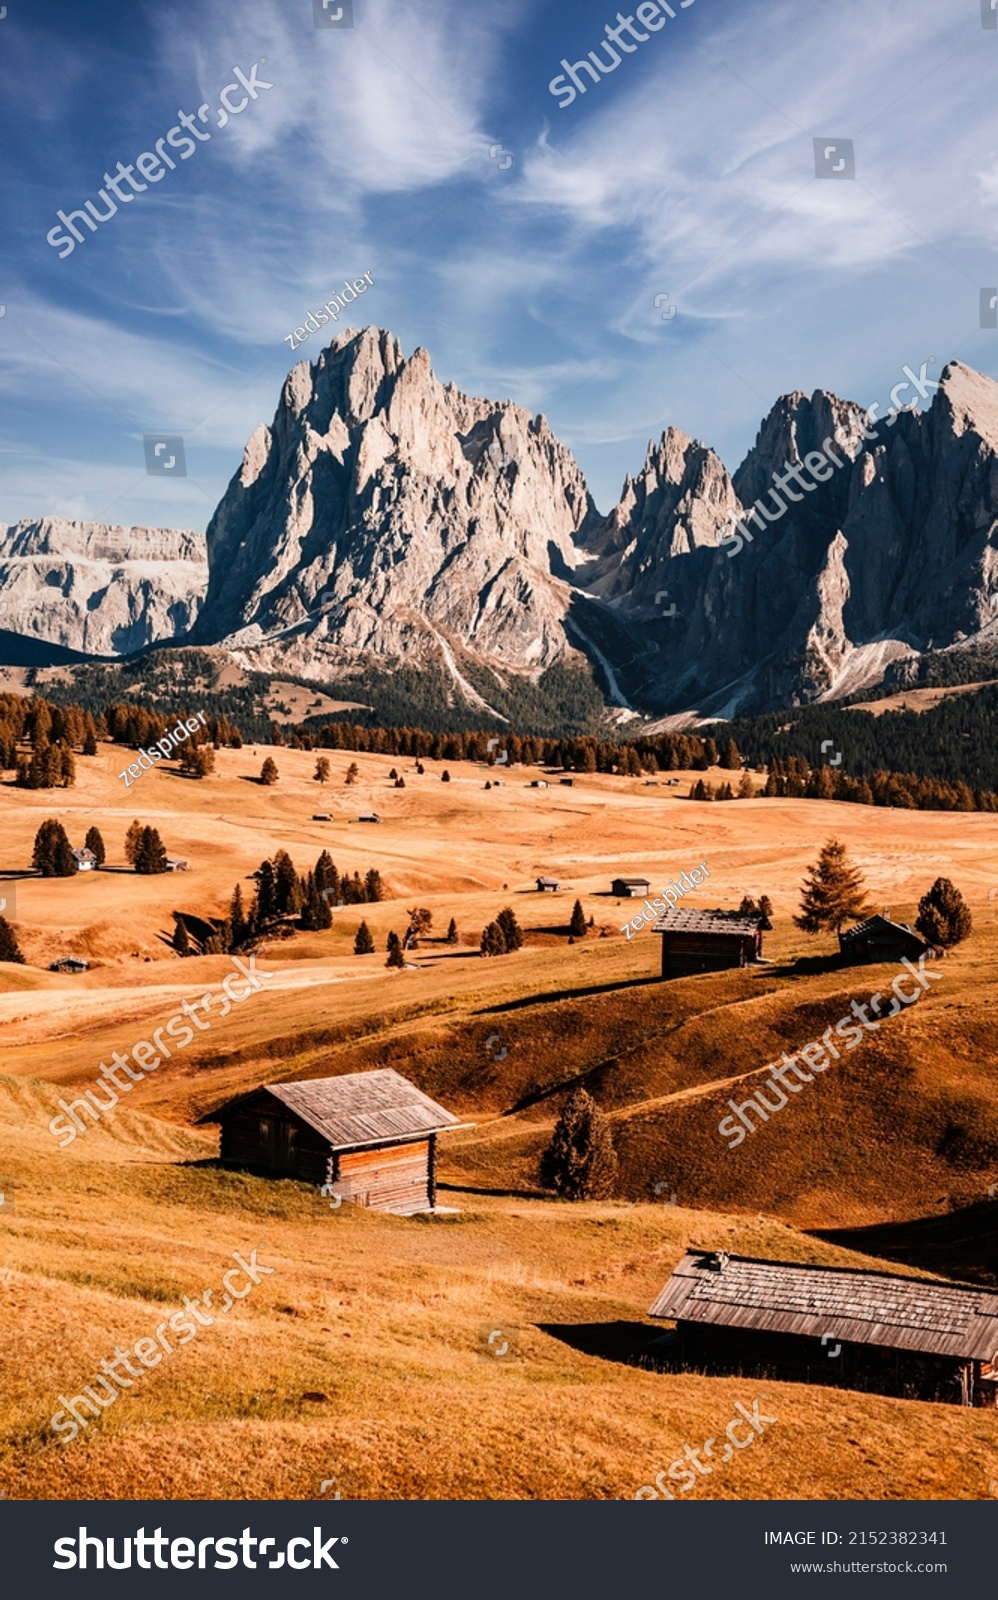 Alpe di Siusi - Seiser Alm- Langkofel mountain group. landscape of Alpine red autumn Alpe di Siusi. hiking nature scenery in dolomites. wooden chalets in Dolomites, Trentino Alto Adige #2152382341